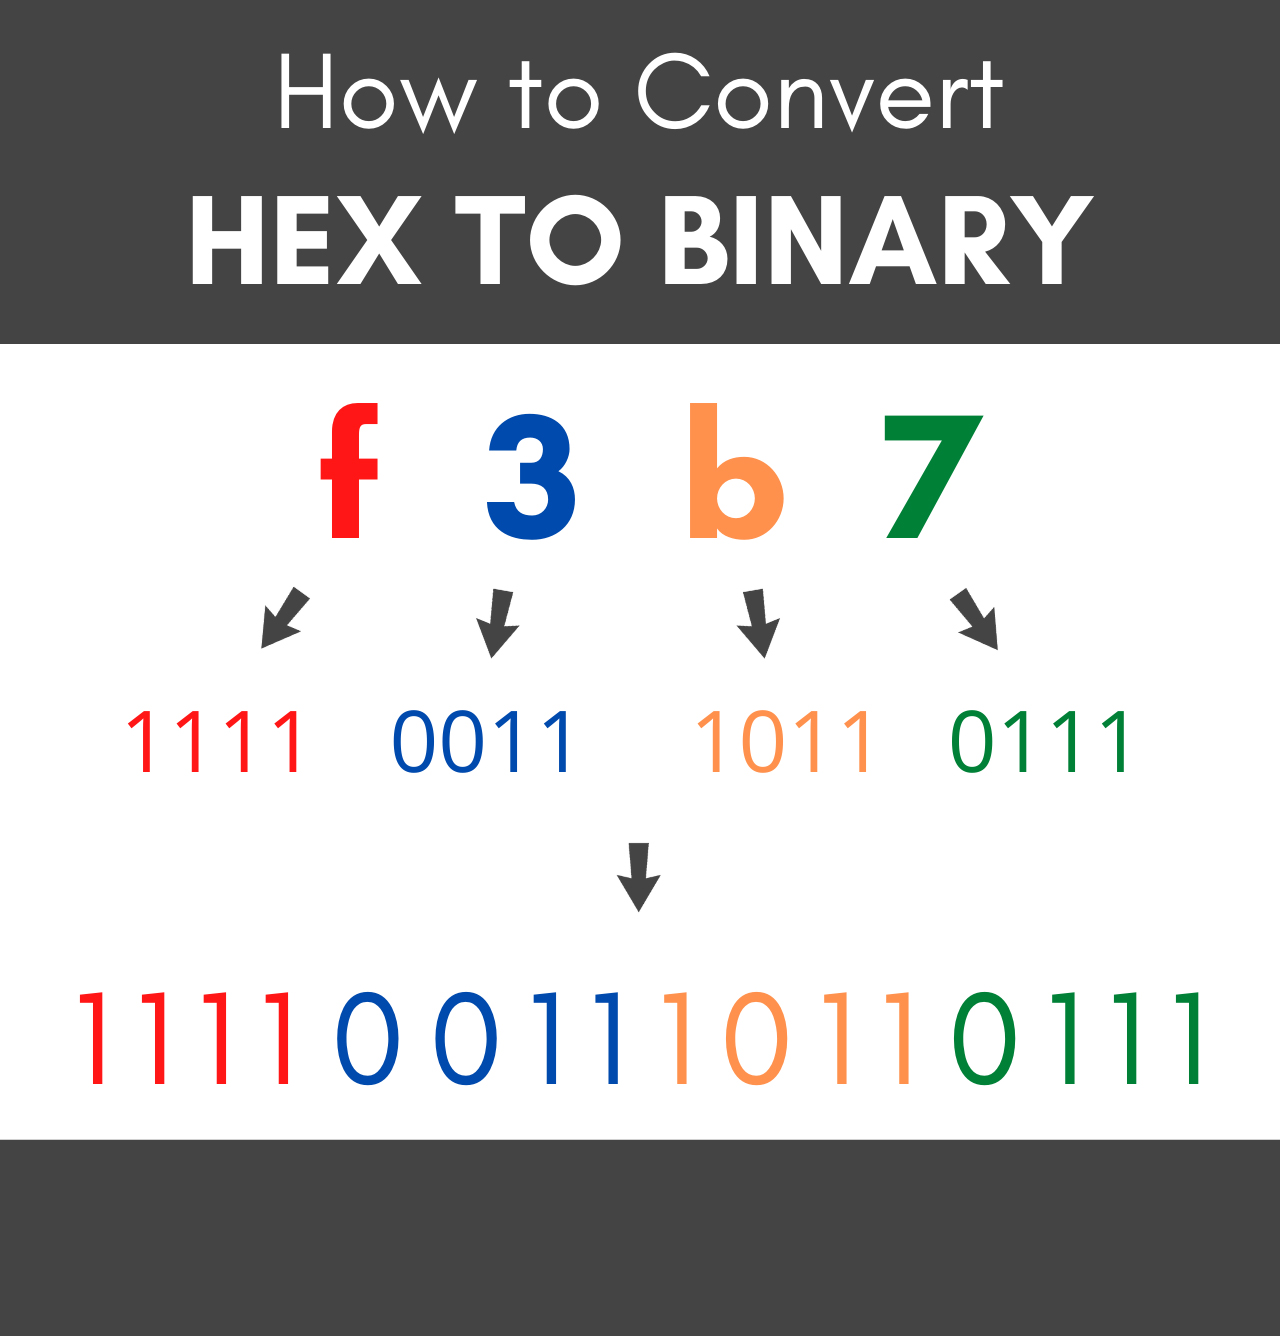 Online hexadecimal to binary conversion tool